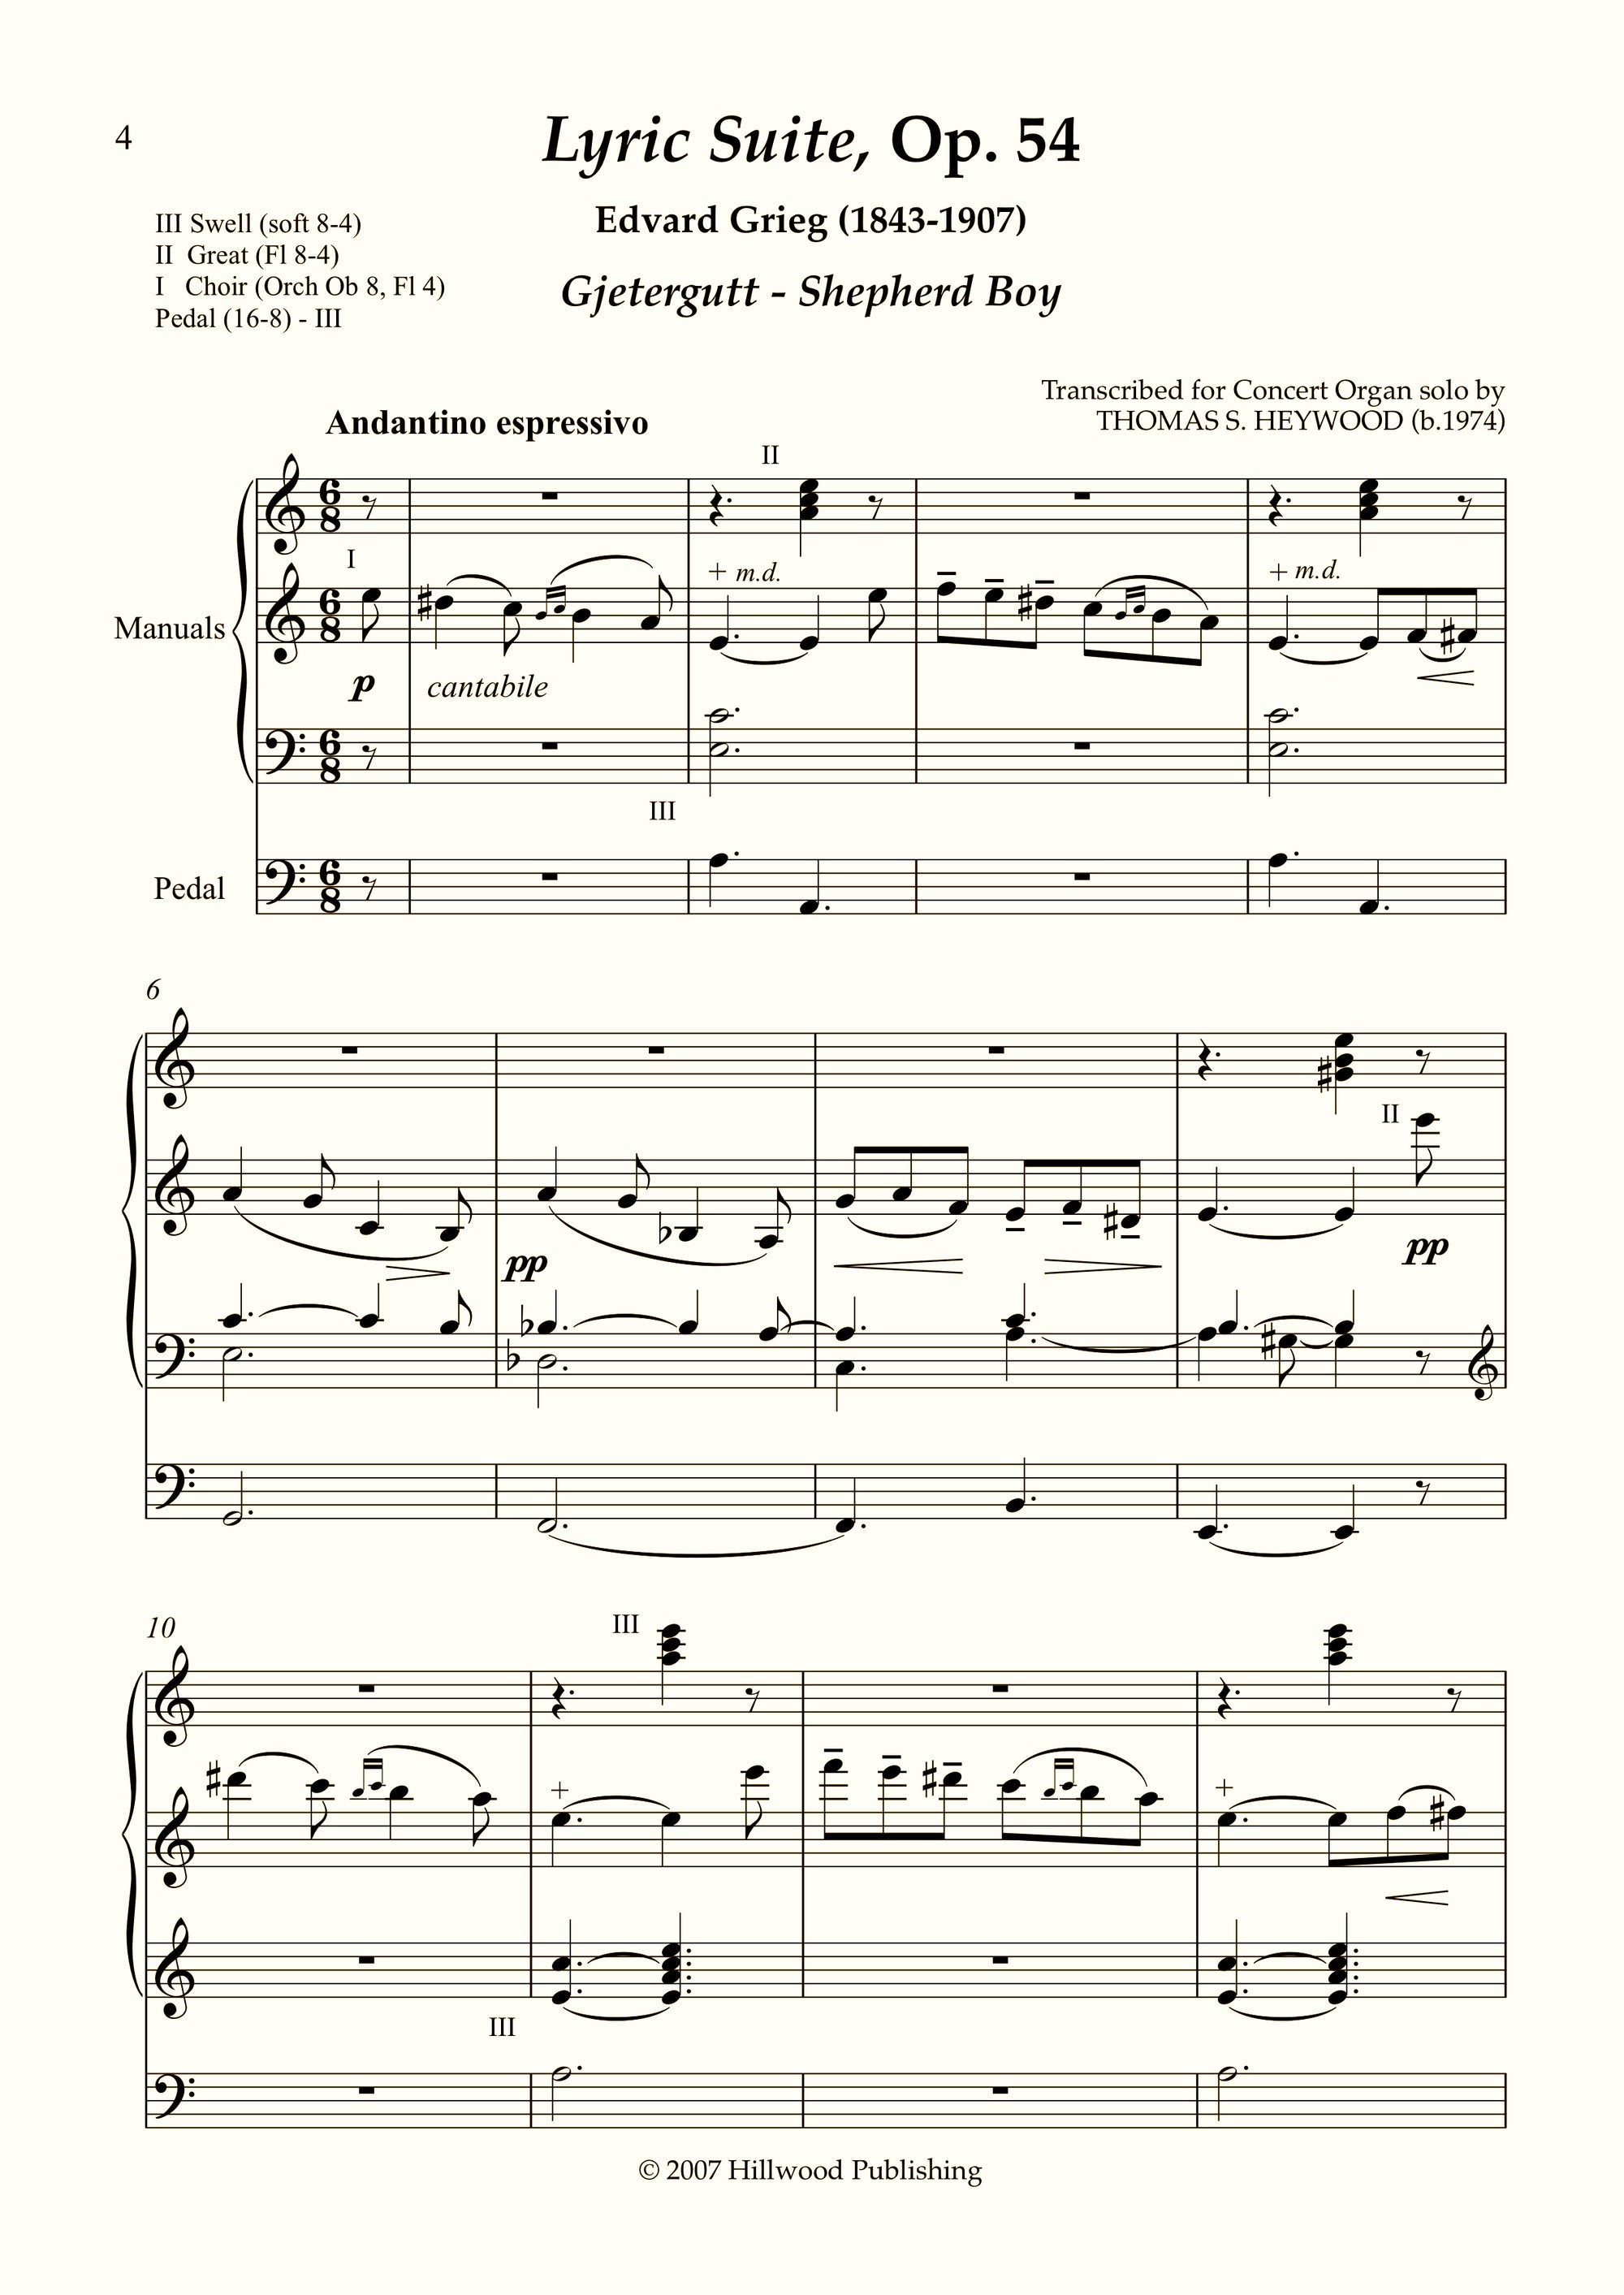 Grieg/Heywood - Shepherd Boy from the Lyric Suite, Op. 54 (Score)